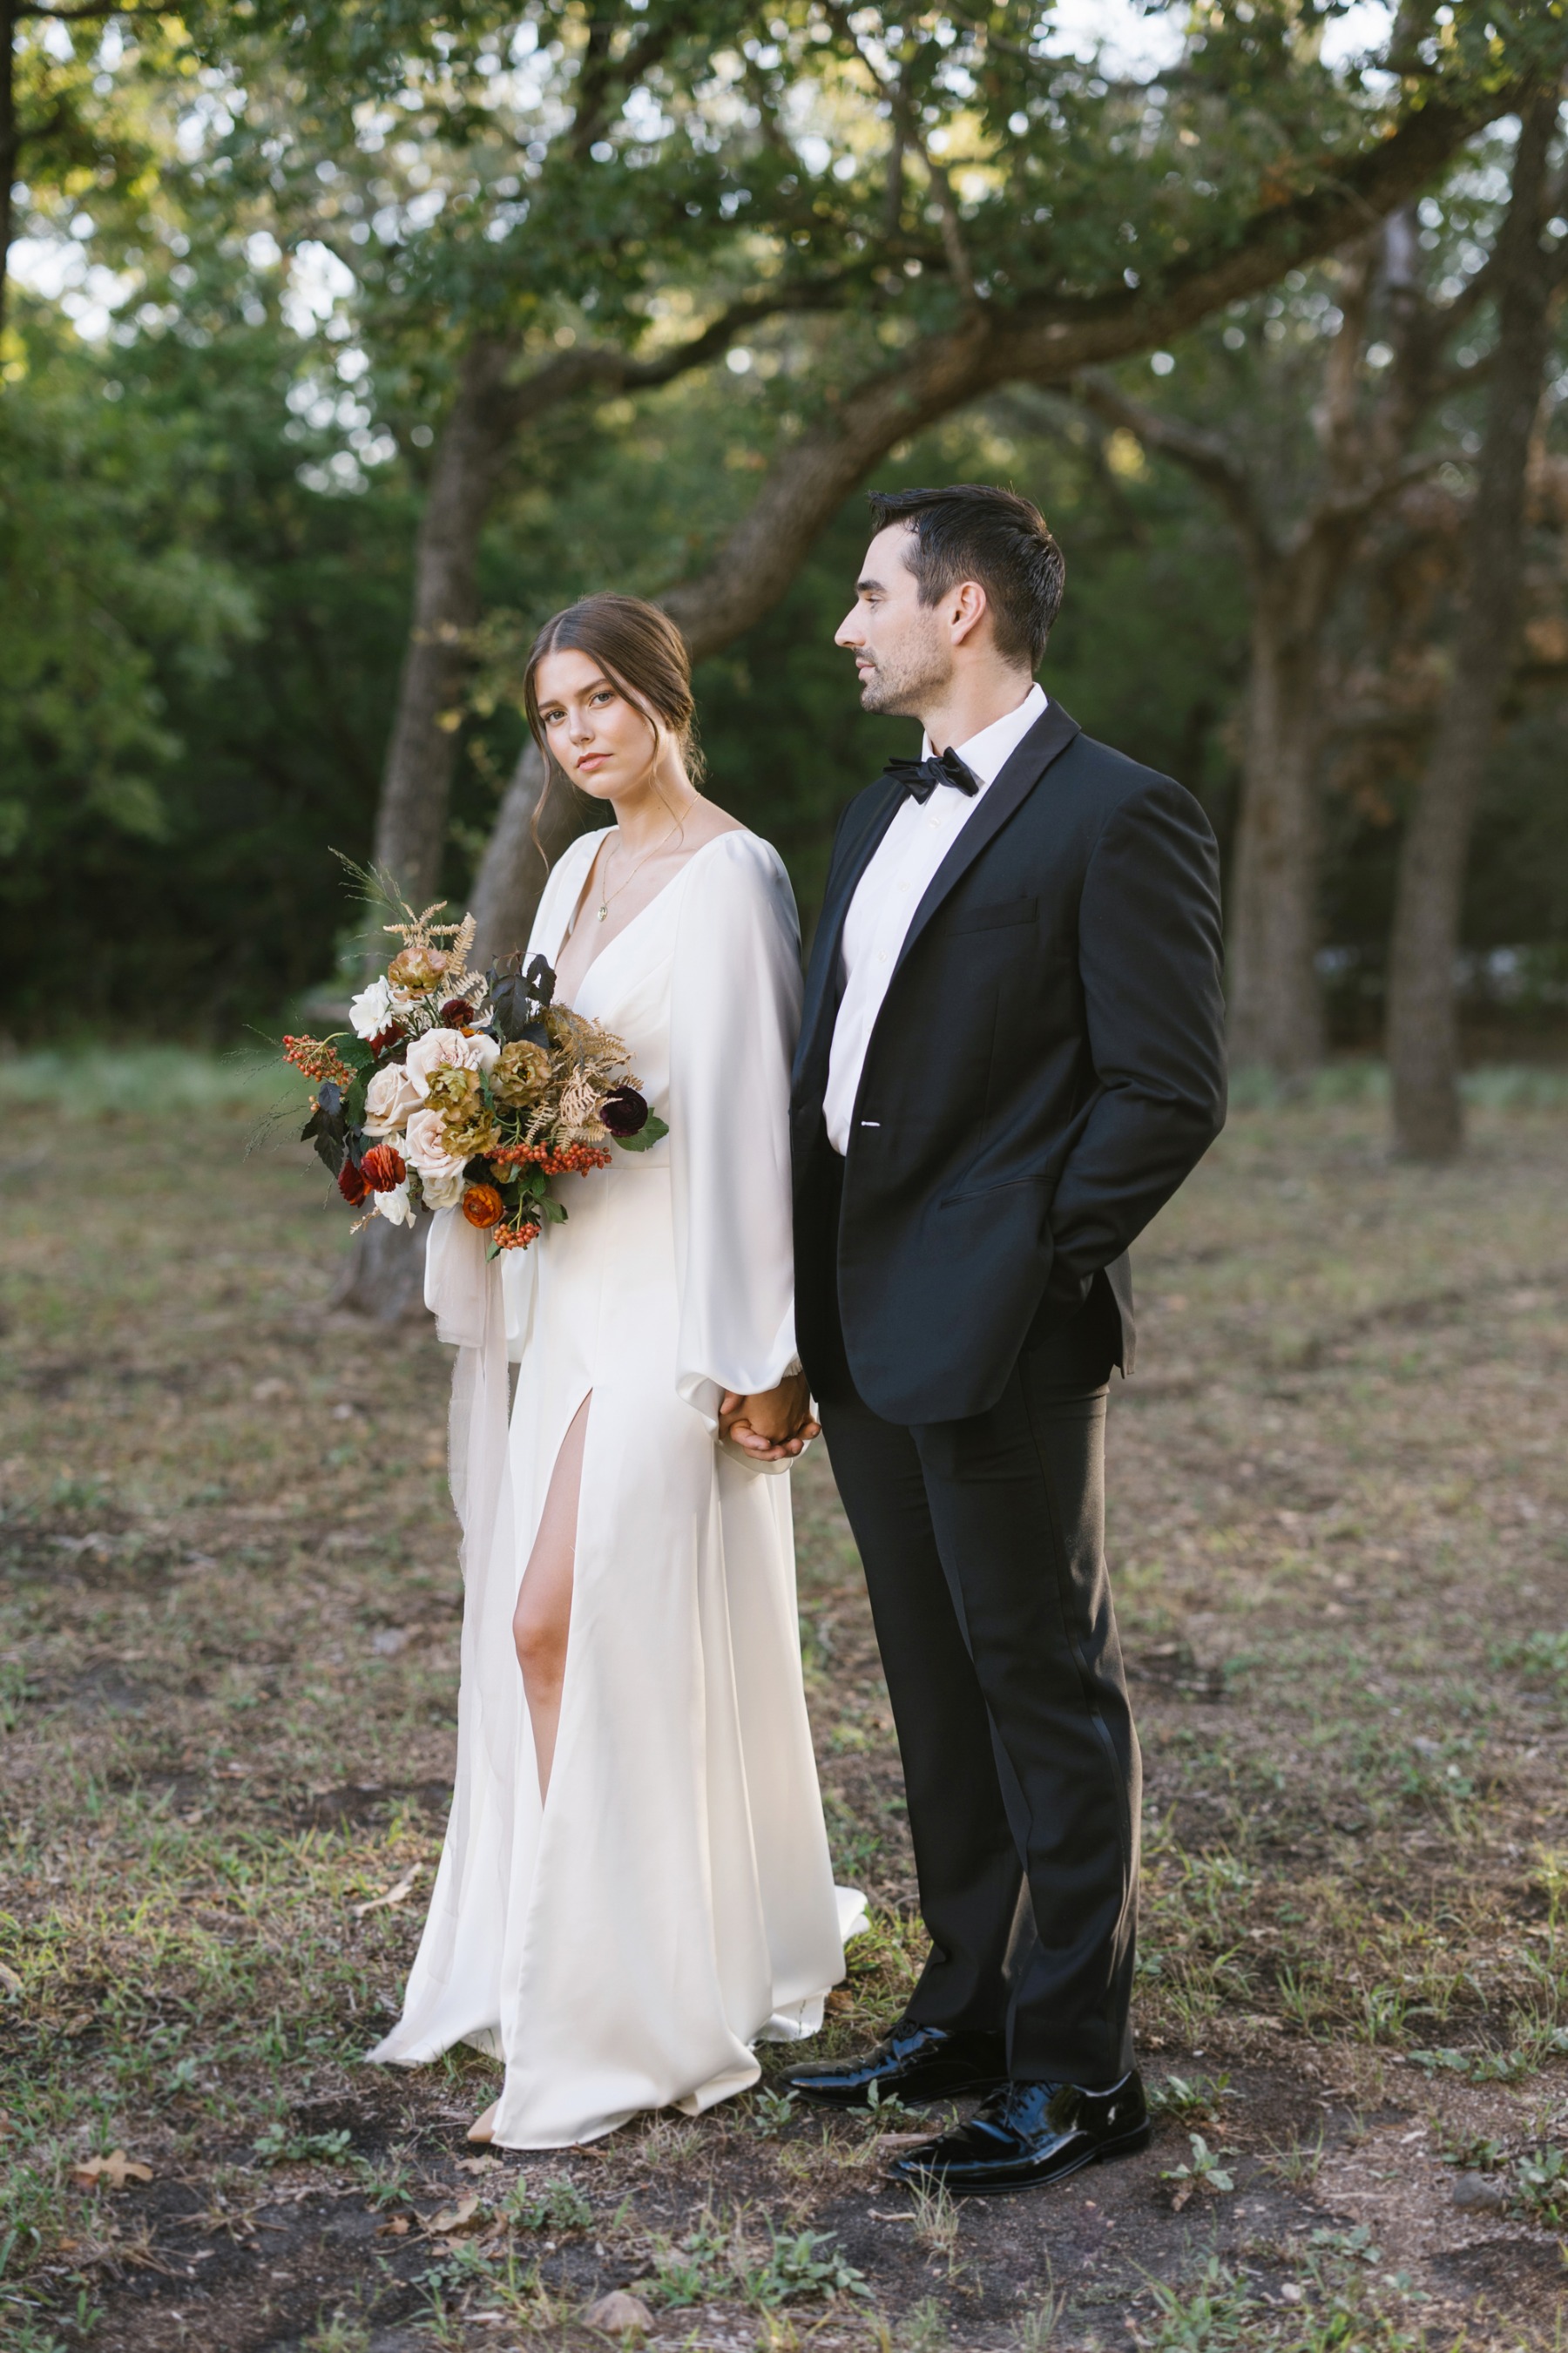 Elegant and modern bride and groom